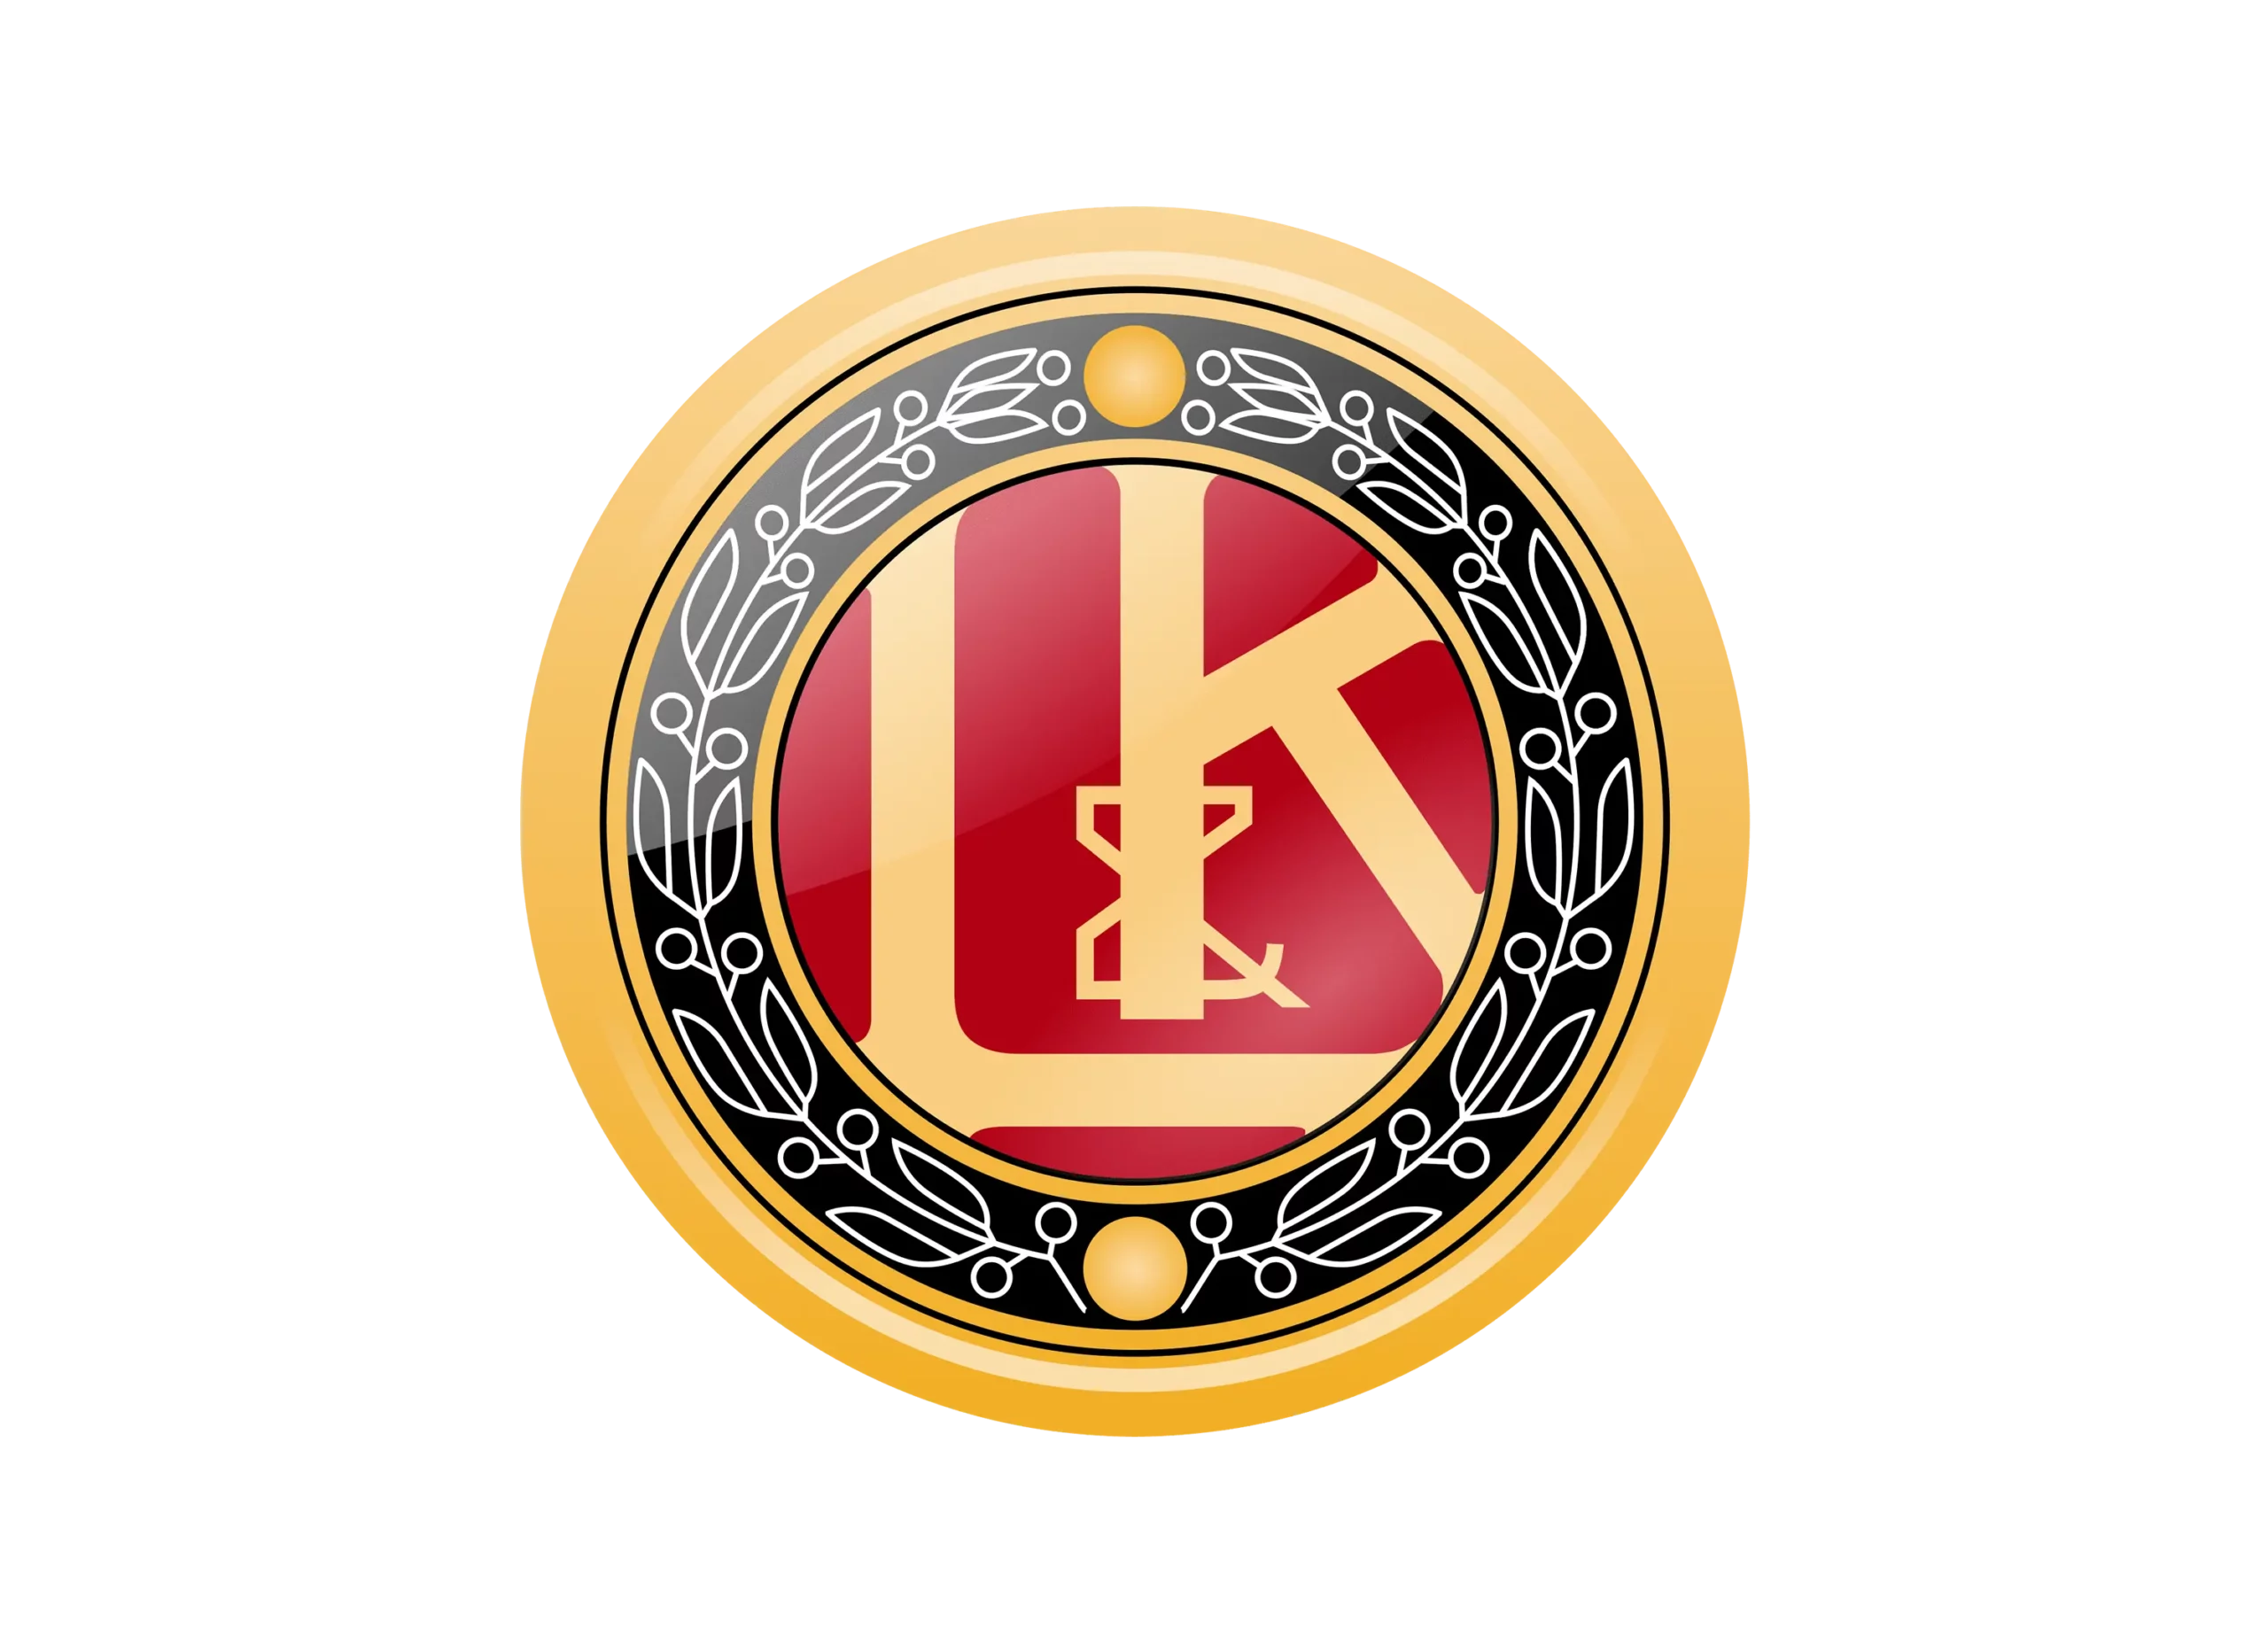 Skoda logo 1905-1925